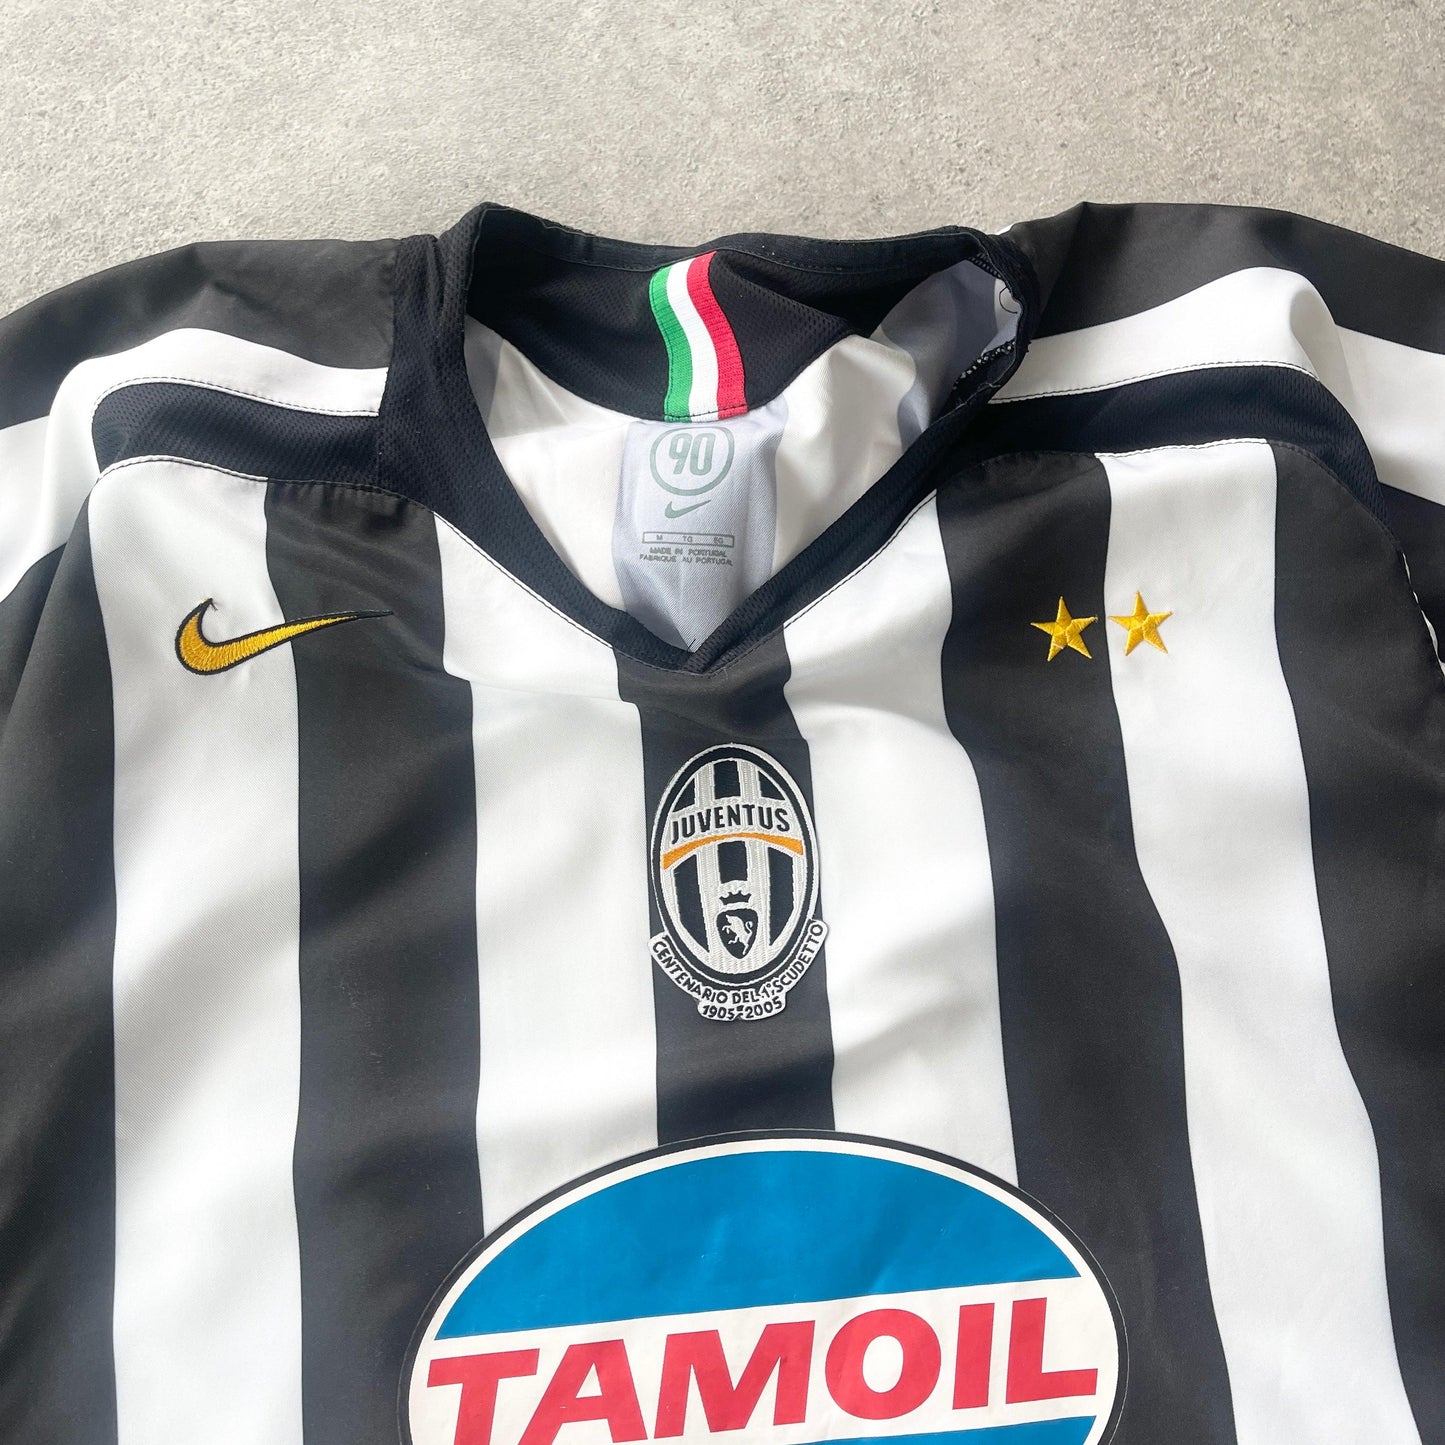 Juventus x Nike 2004/05 Del Piero football home shirt (M) - Known Source